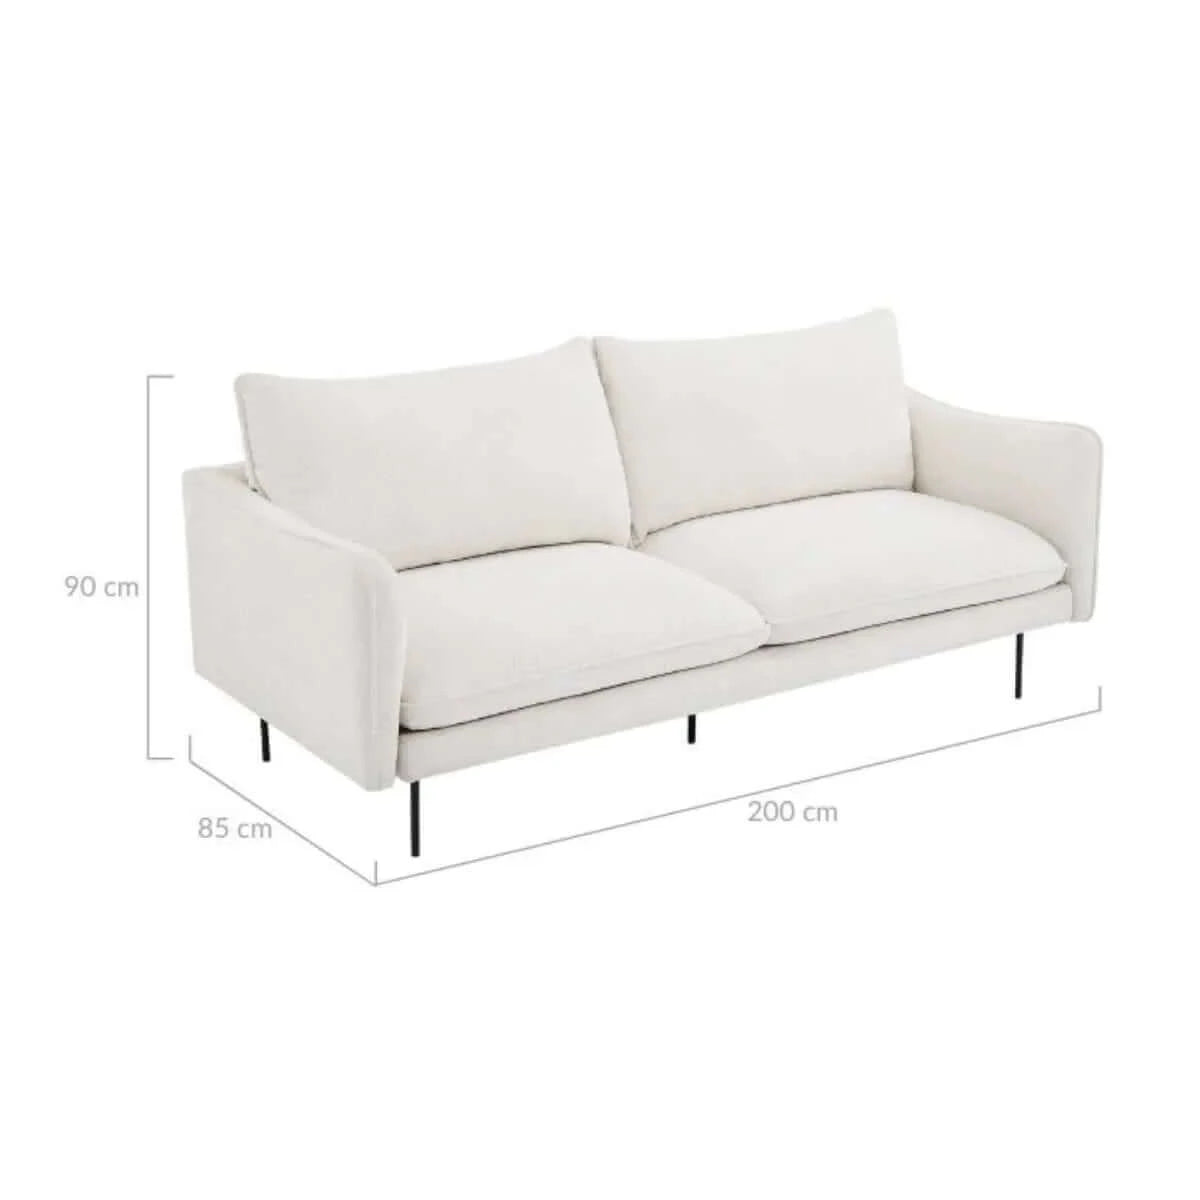 Buy jasmine boucle 3 seater sofa - upinteriors-Upinteriors